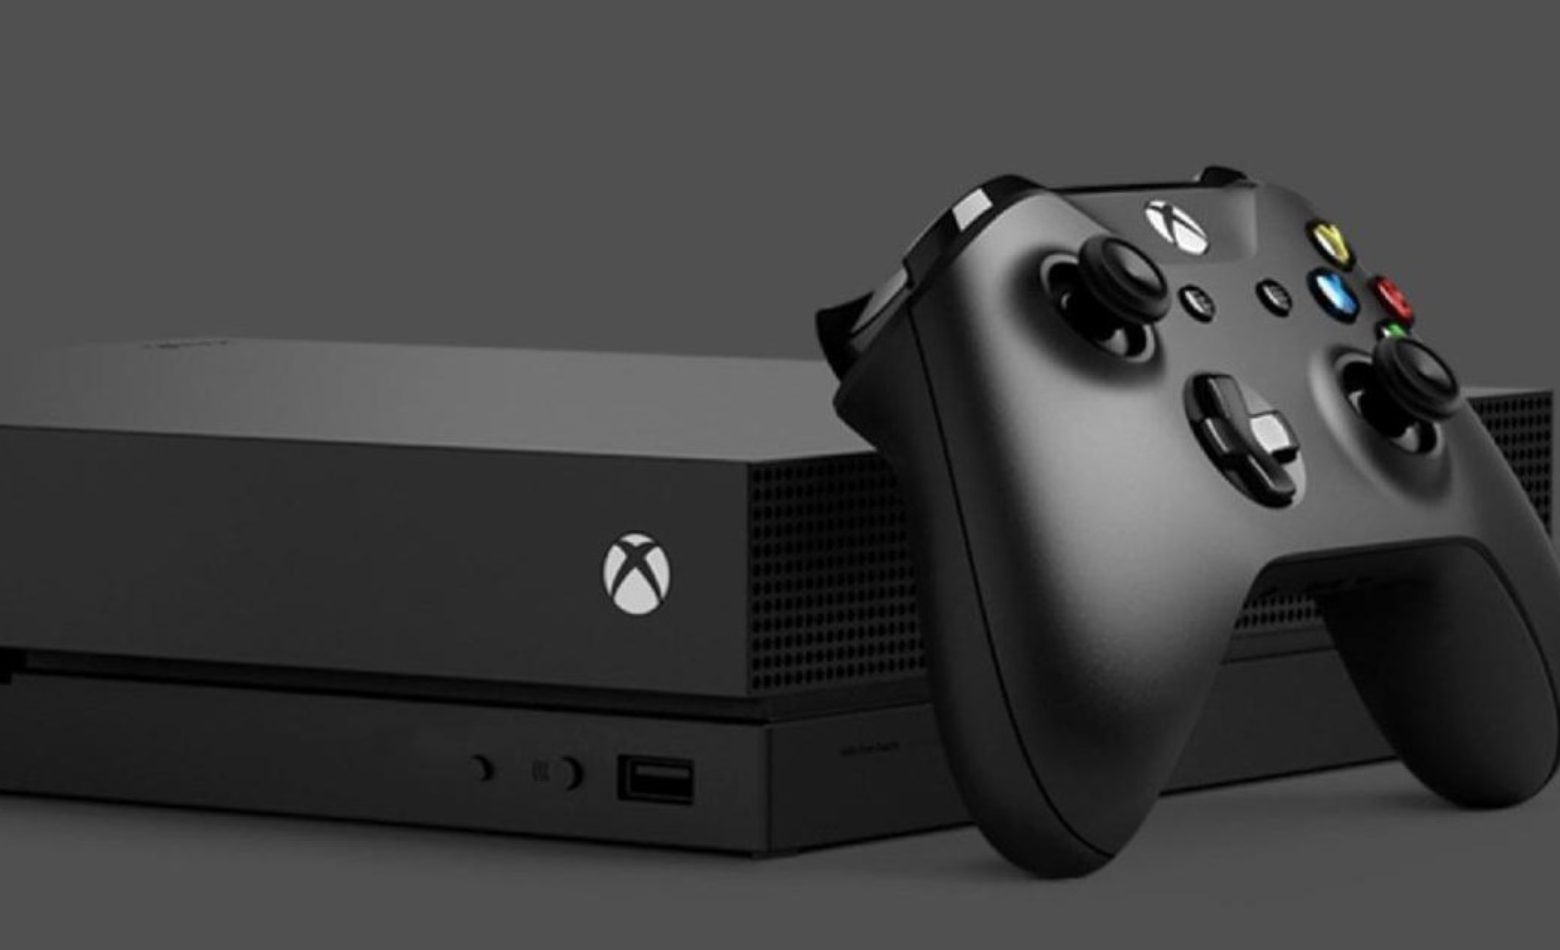 Tudo o que sabemos sobre o Xbox One X até agora